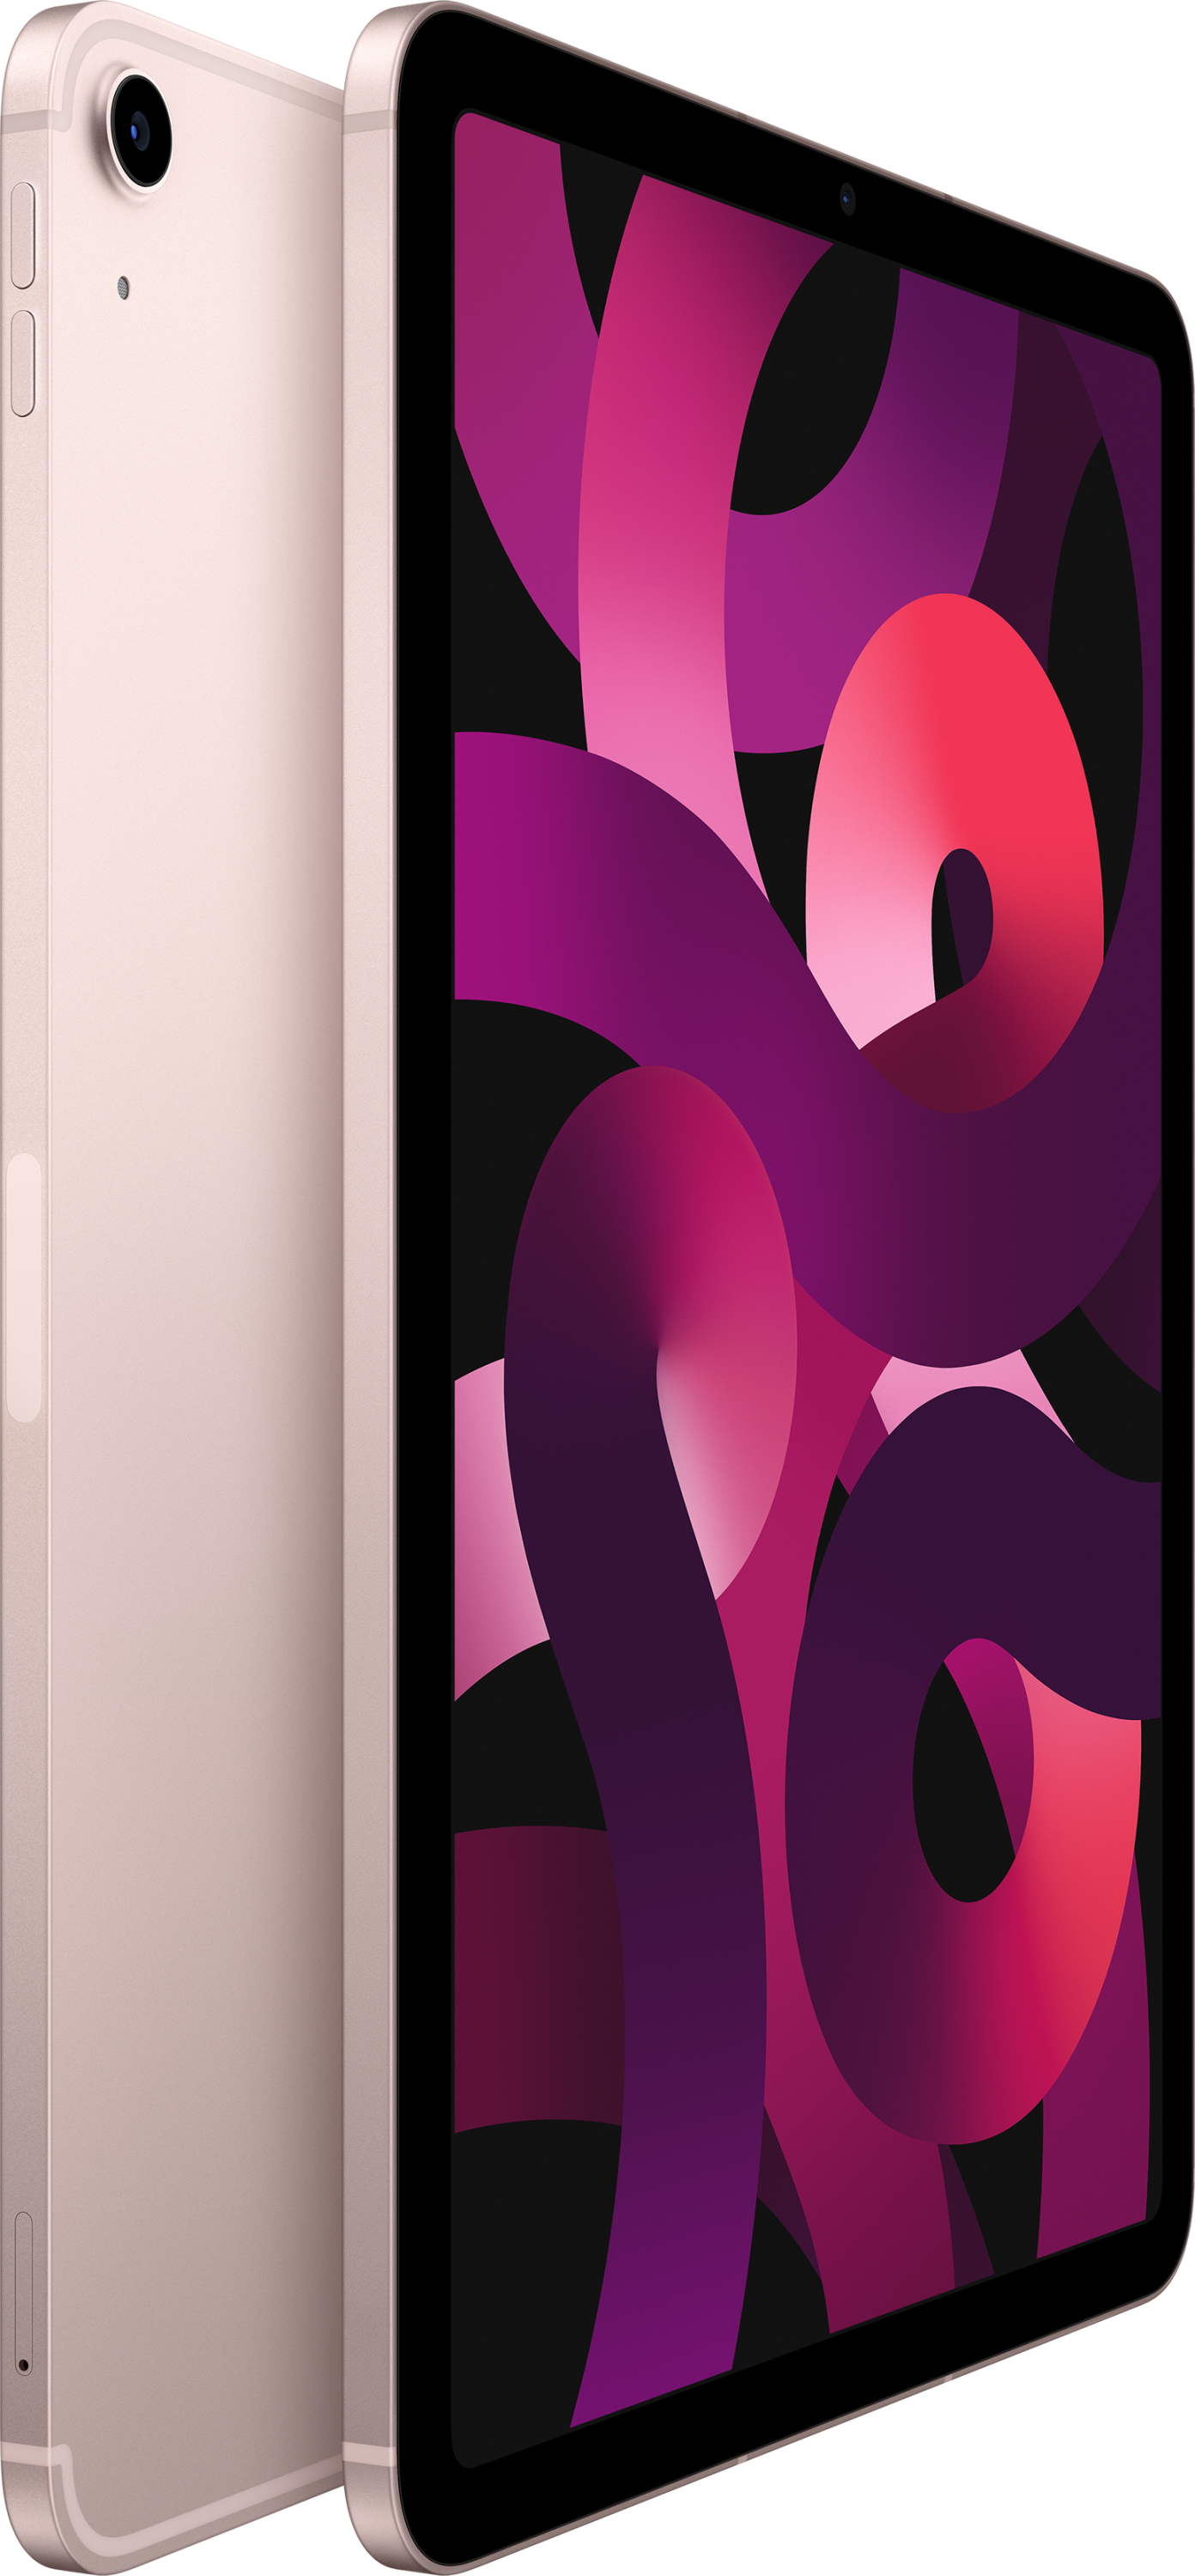 Apple iPad Air Wi-Fi + Cellular 64GB - Pink | Sweetwater